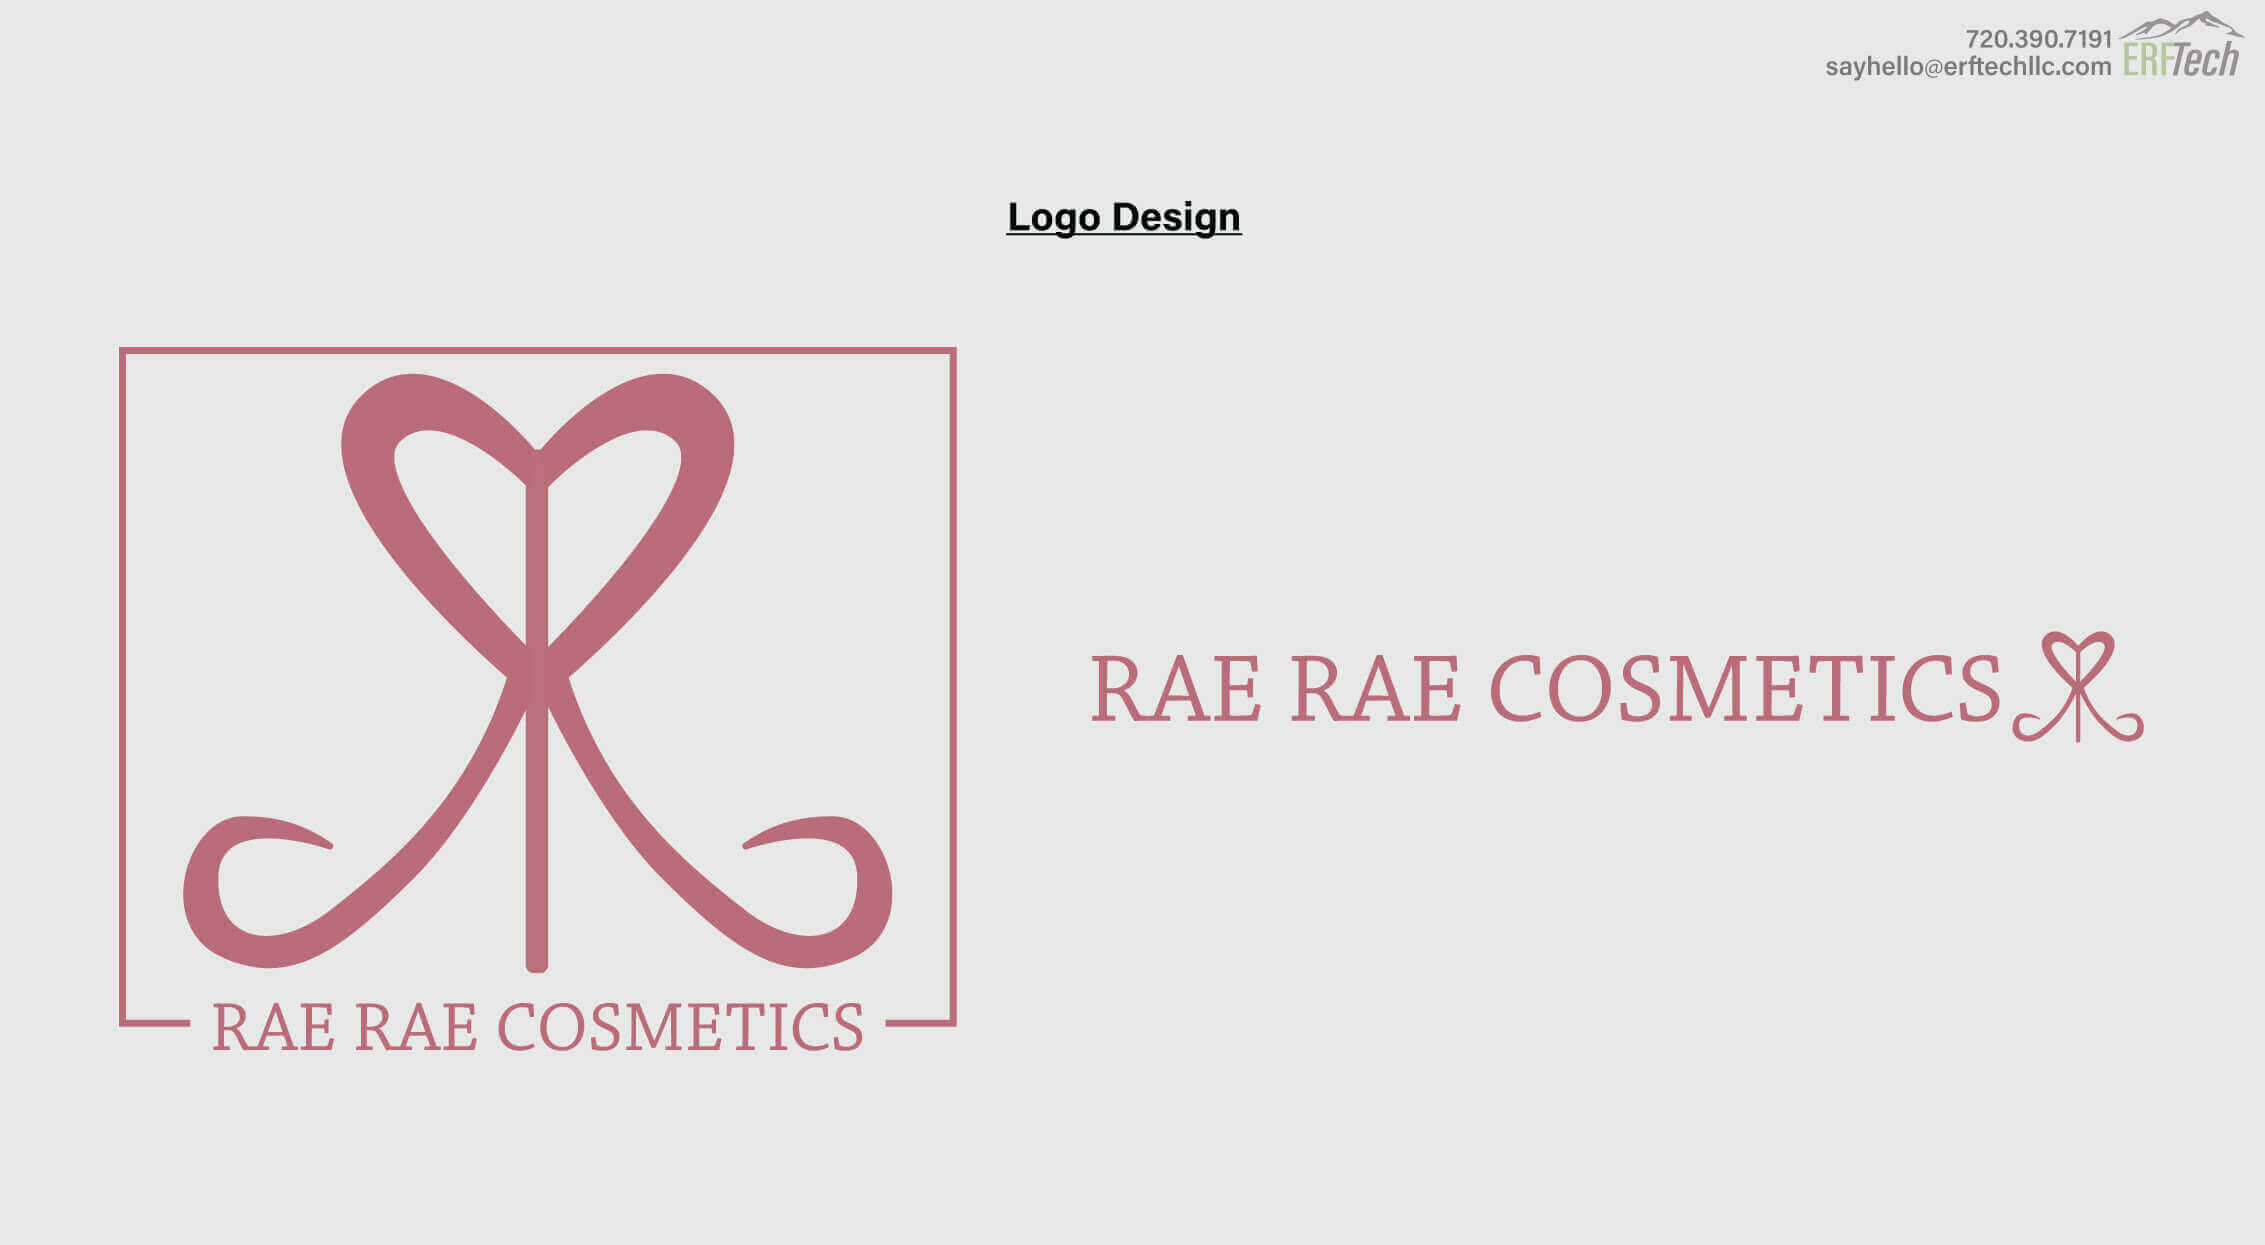 Logo Design for Rae Rae Cosmetics in Denver, CO